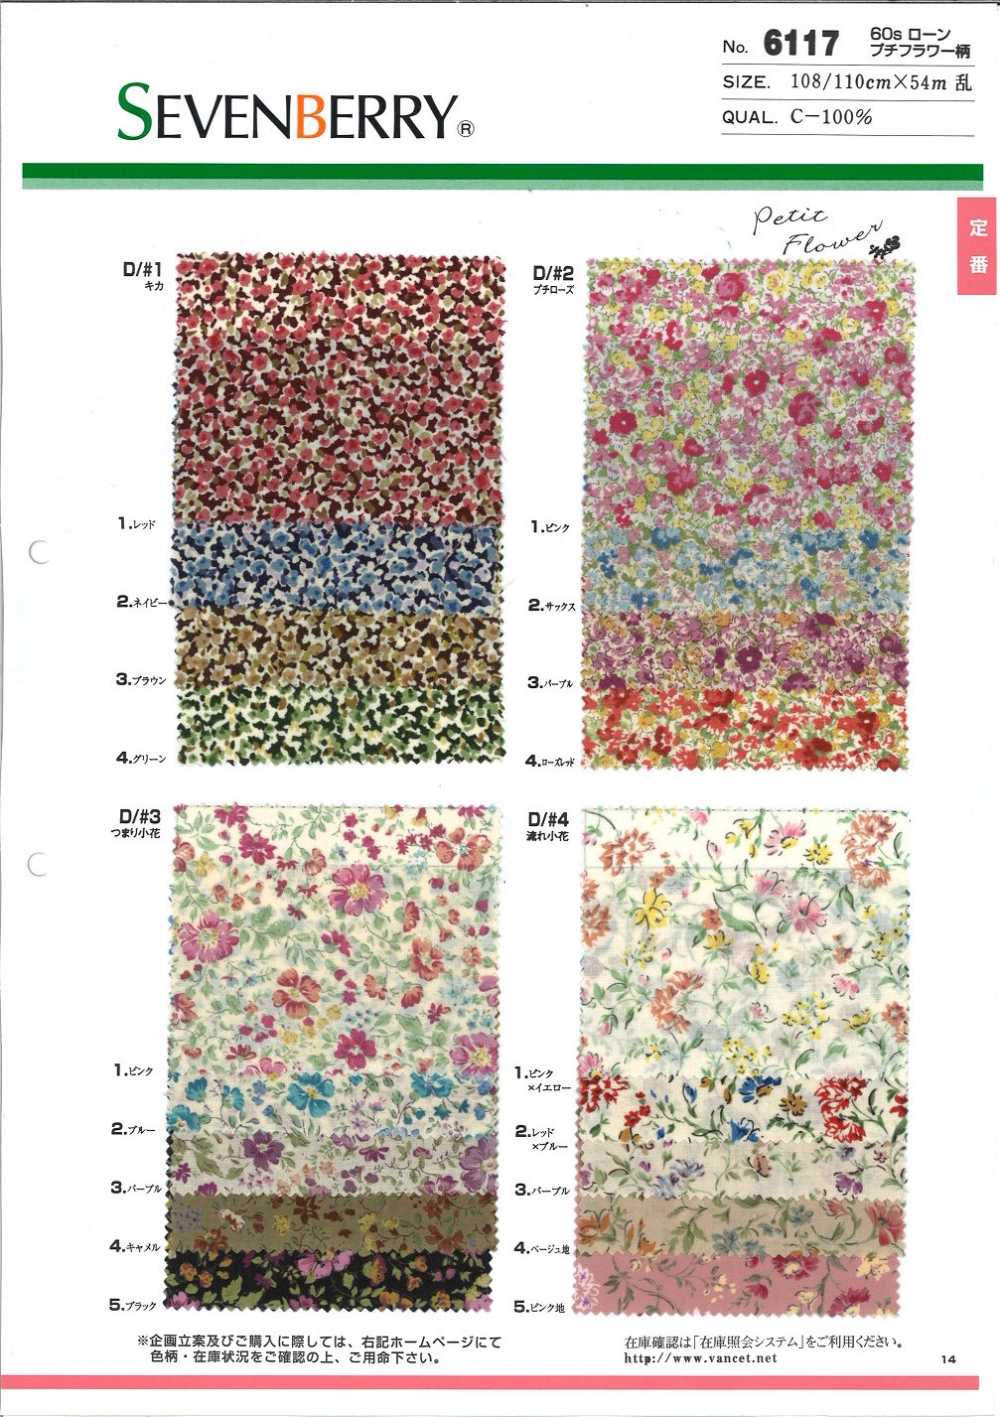 6117 60-fädiges Rasenblumenmuster[Textilgewebe] VANCET